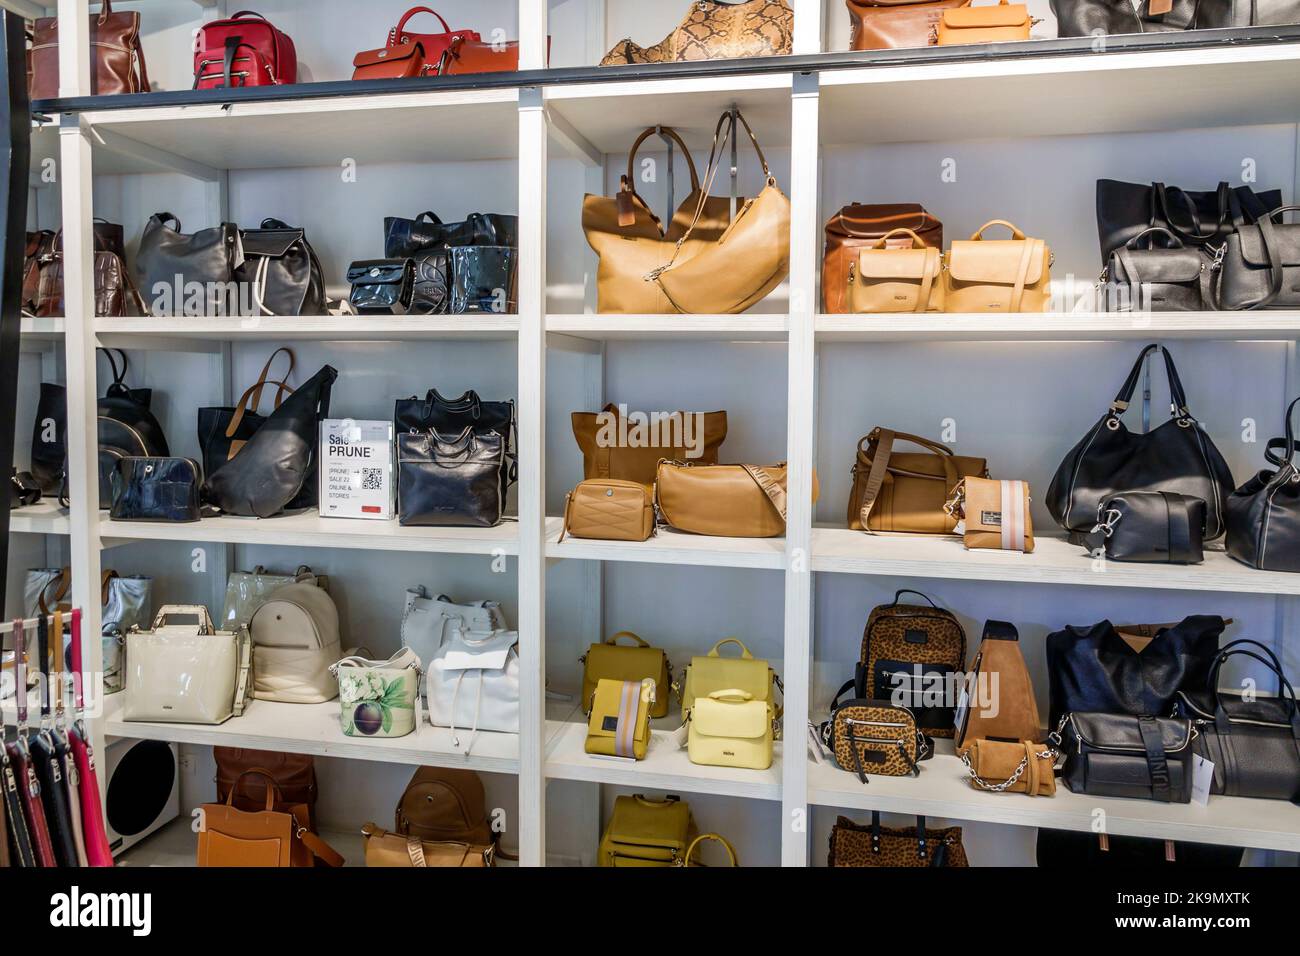 Luxury designer handbag Stock Vector Images - Alamy